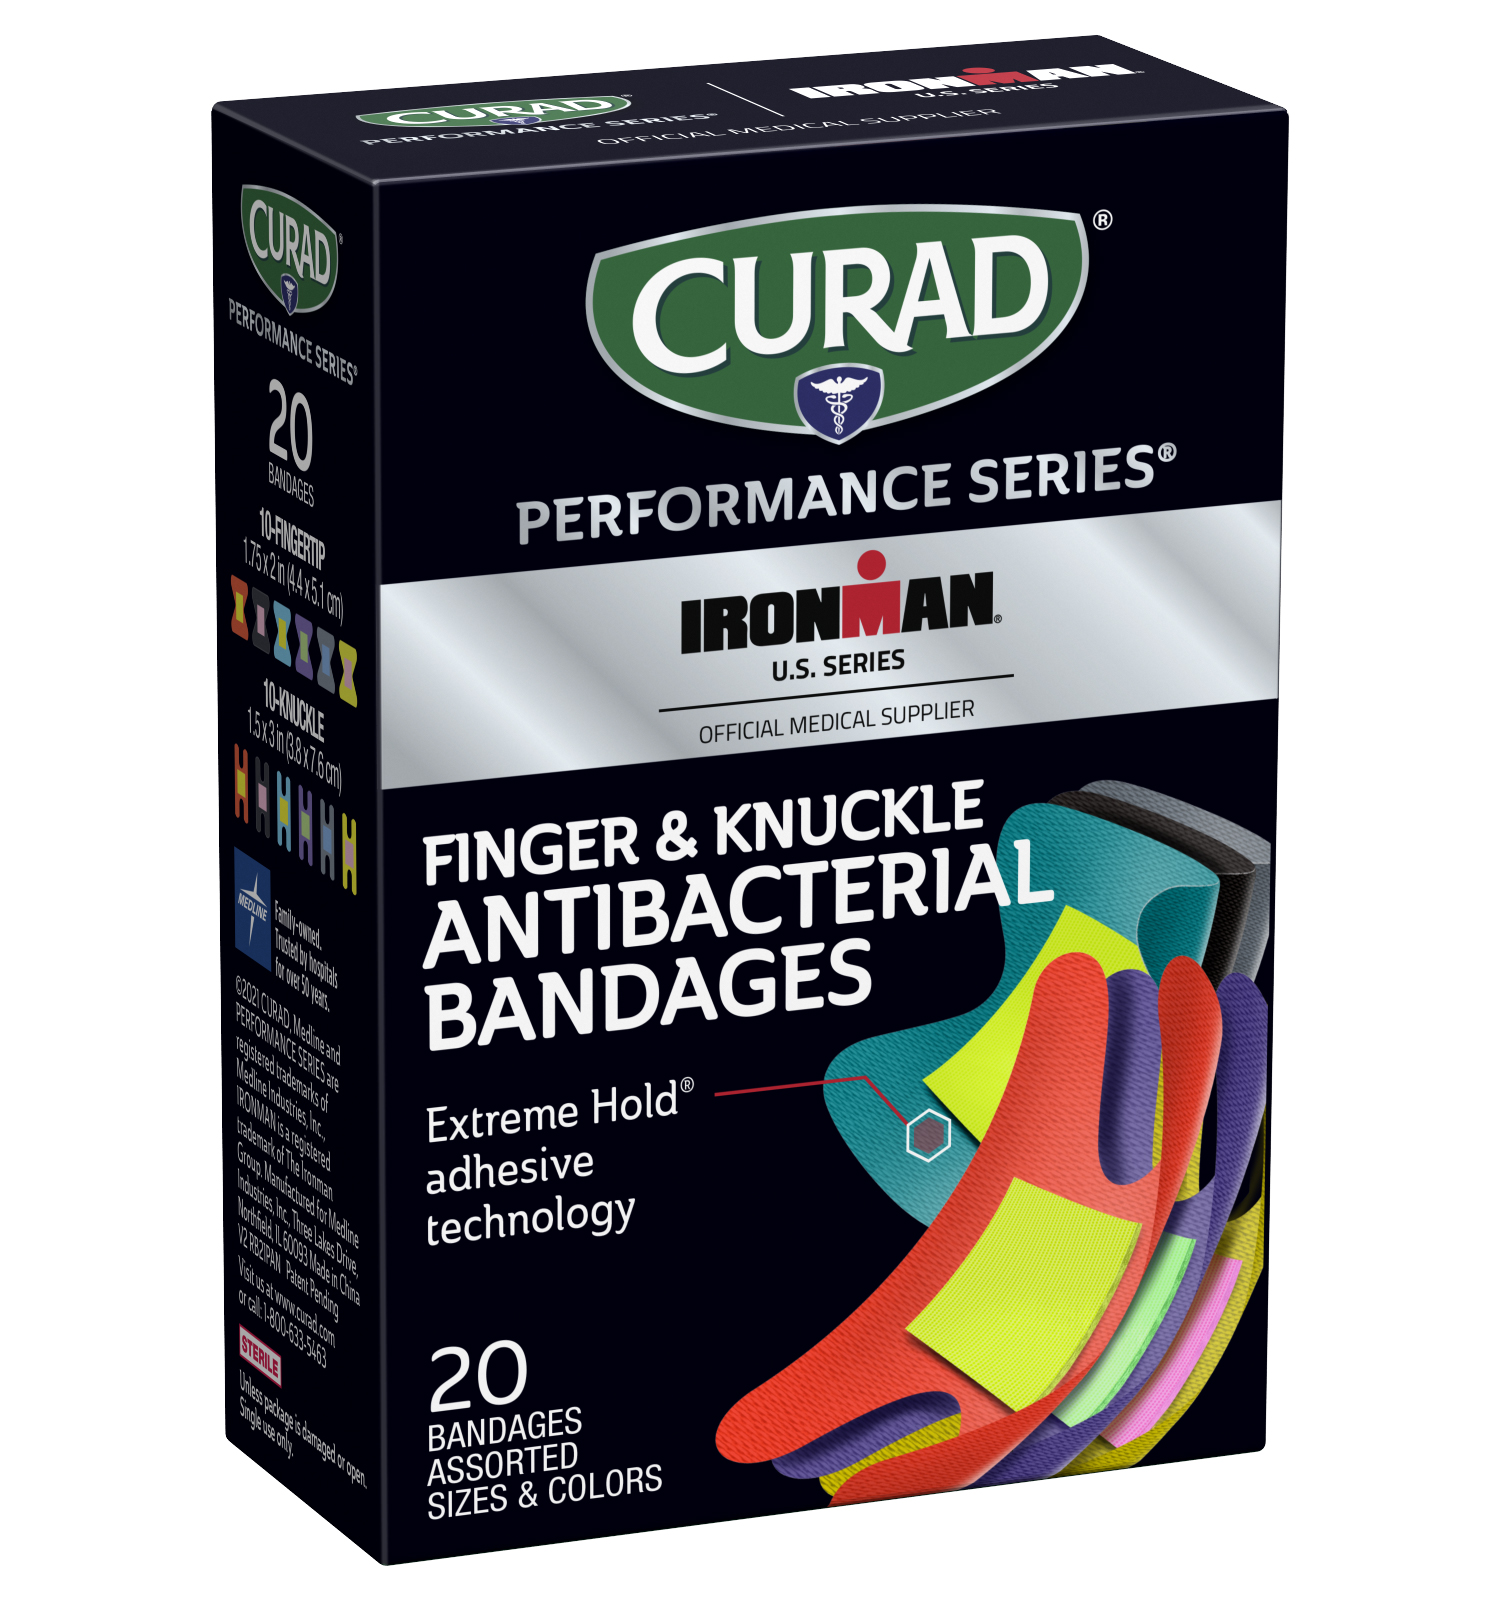 TOUGH-STRIPS® Finger Care Bandages, 15 count